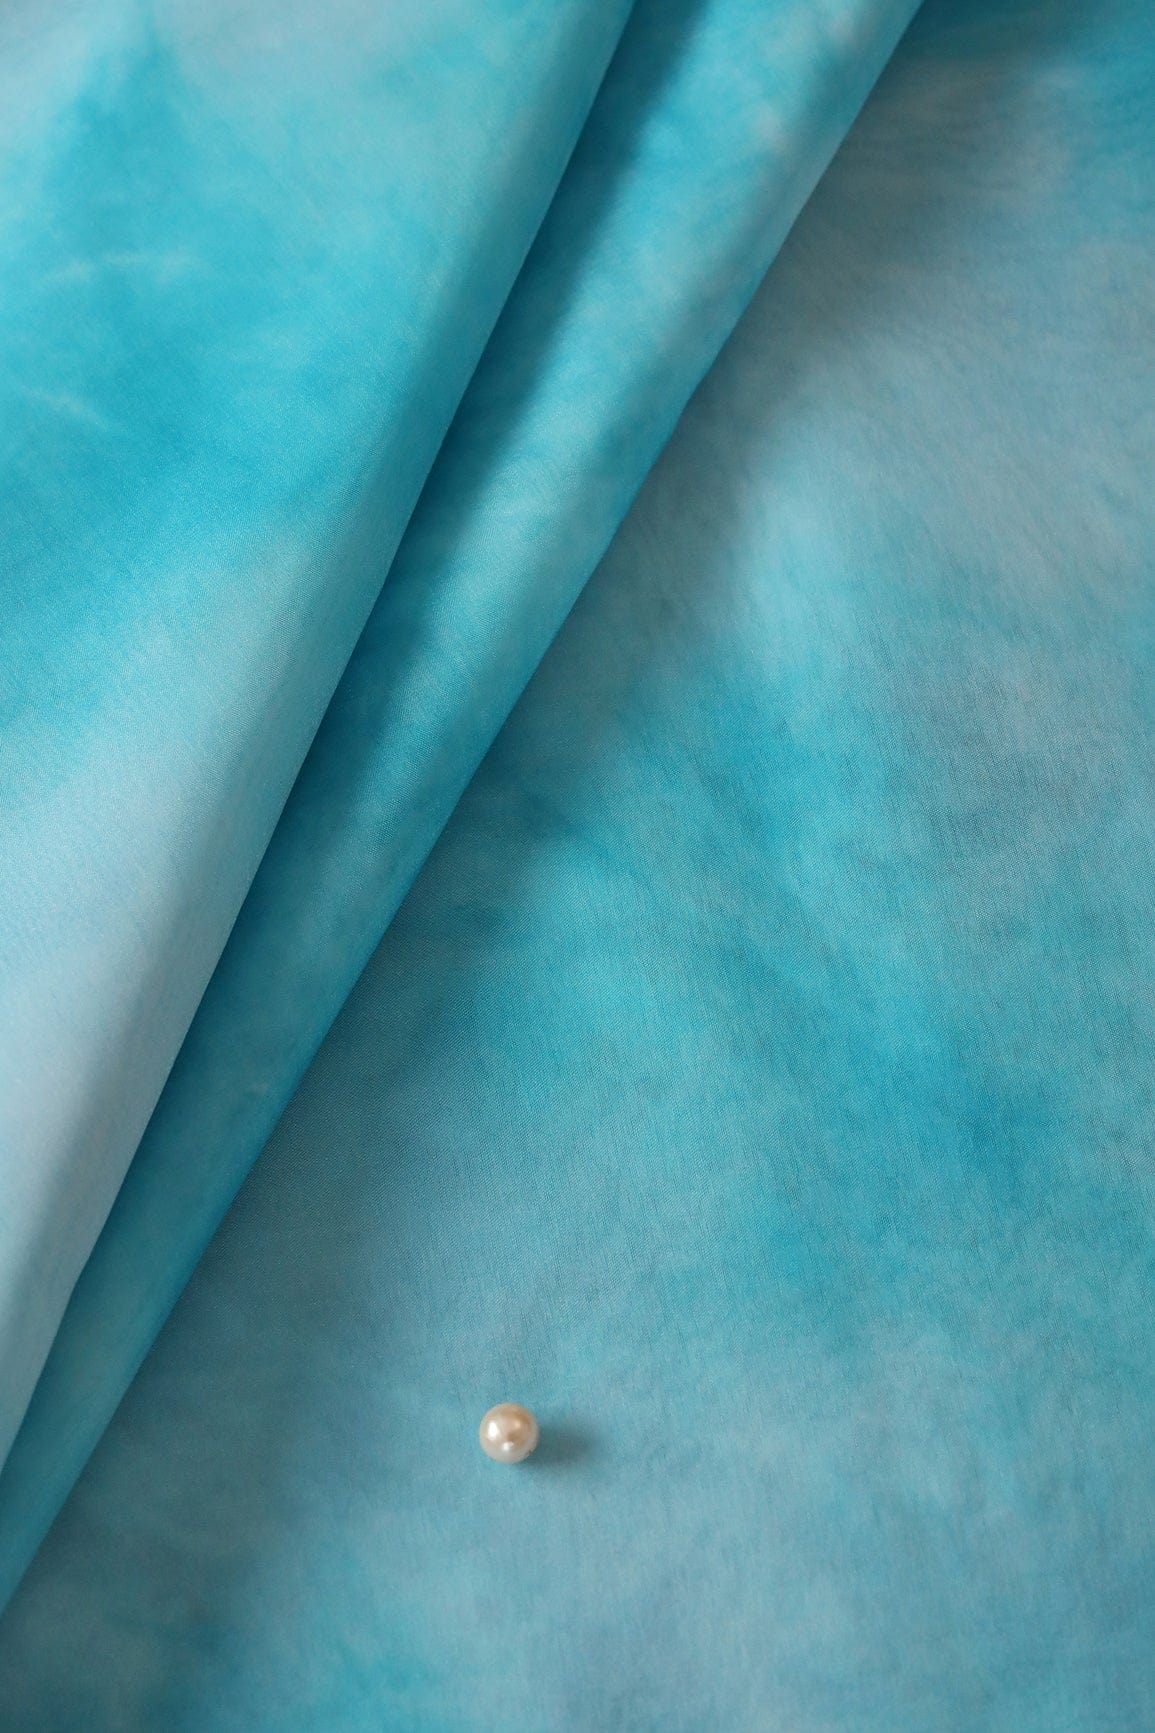 doeraa Prints 2 Meter Cut Piece Of Sky Blue Tie & Dye Shibori Print On Organza Fabric